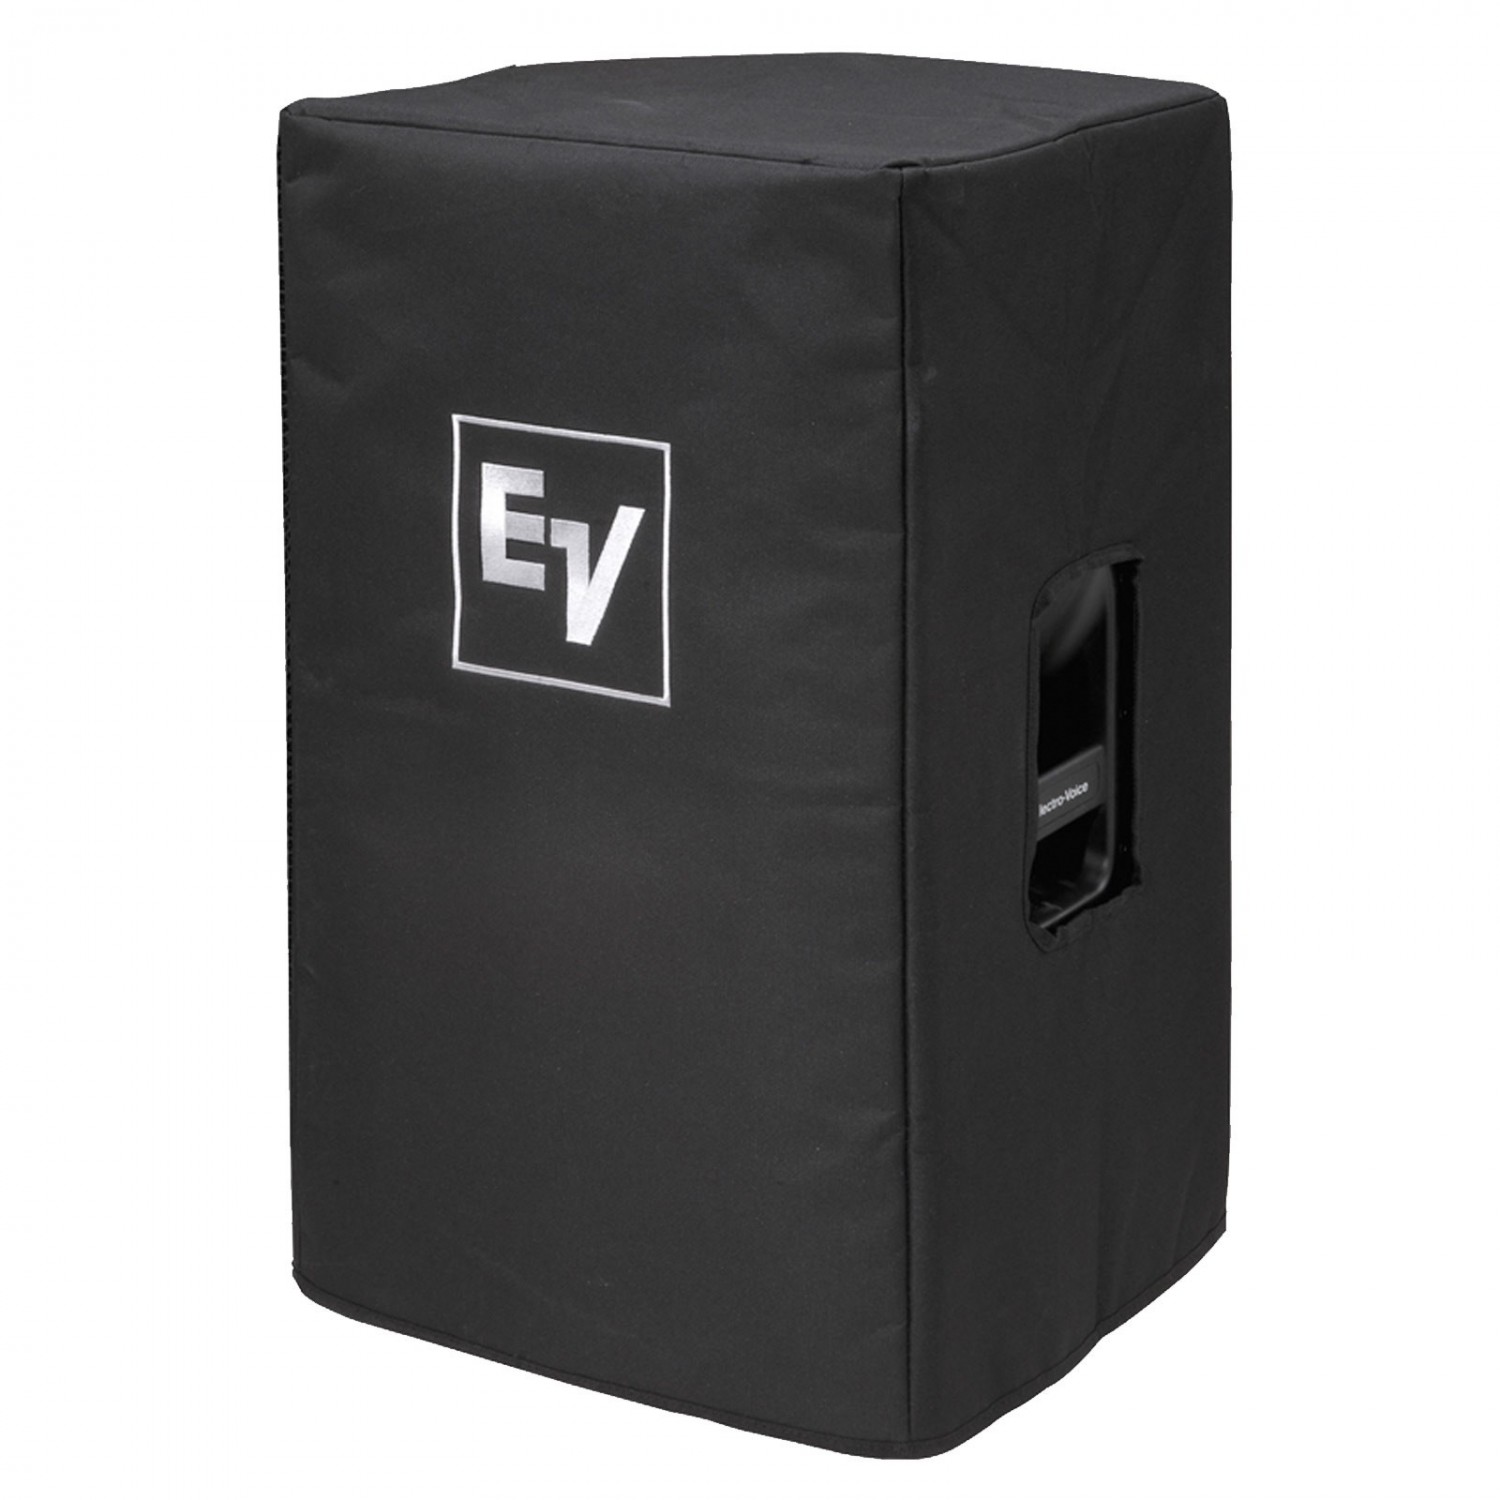 Electro-Voice ELX200-12-CVR - pokrowiec